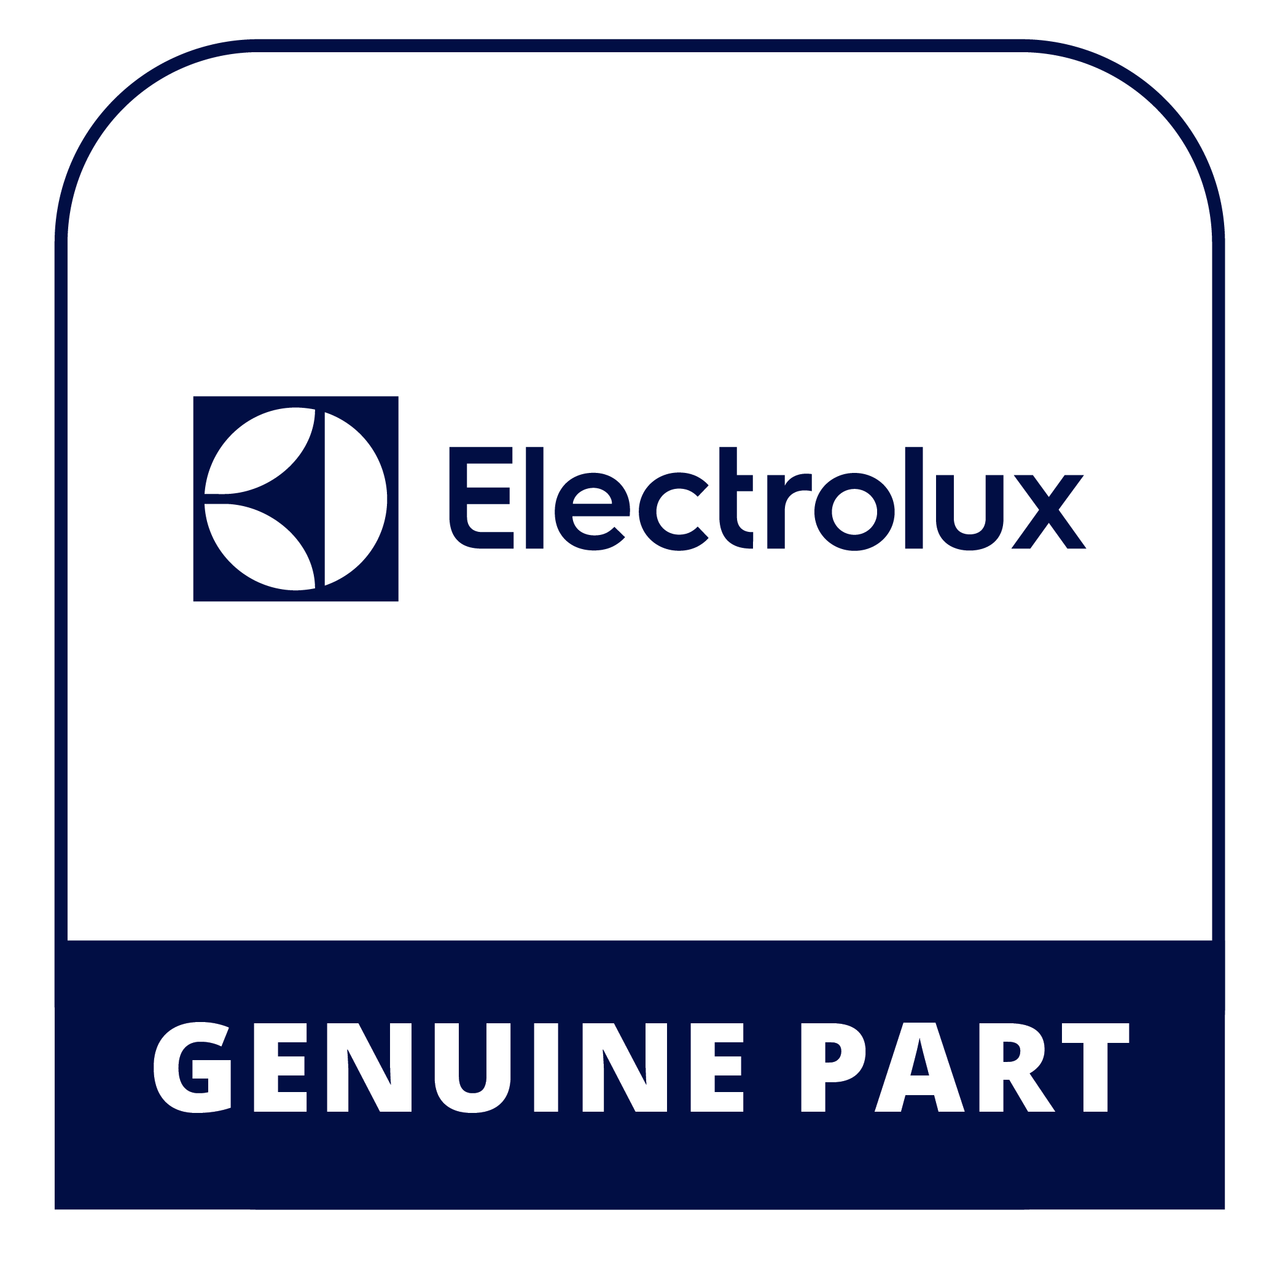 Frigidaire - Electrolux 316601900 Shield - Genuine Electrolux Part